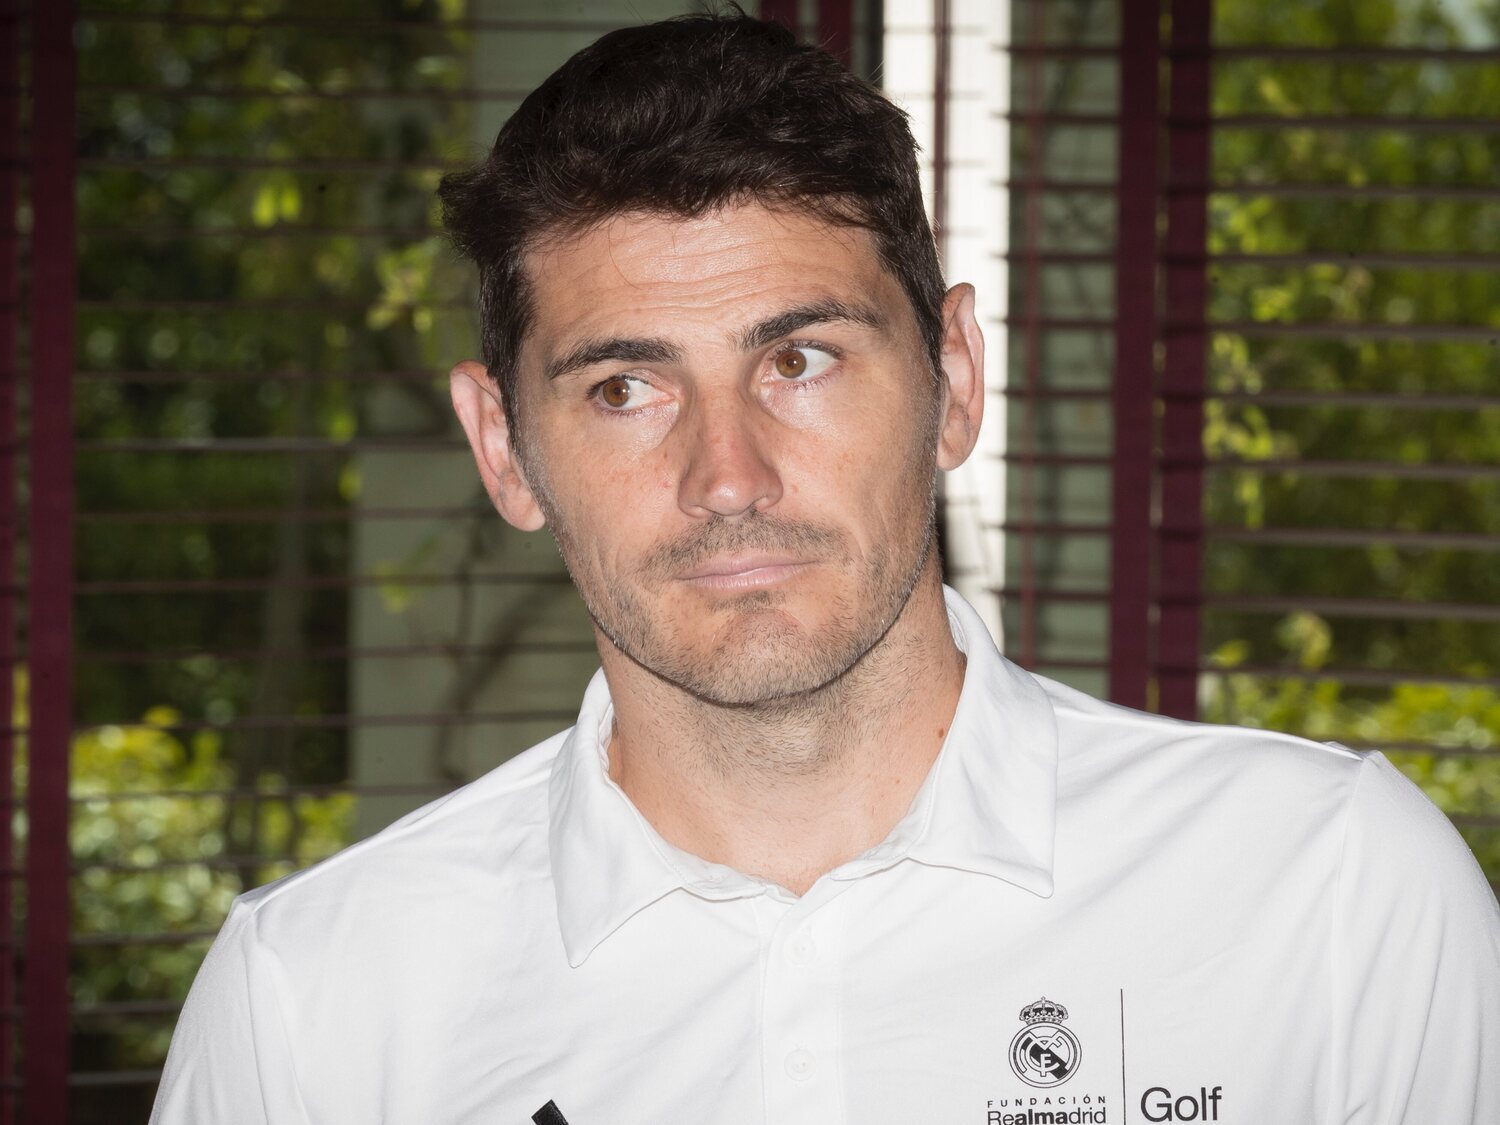 Iker Casillas responde a las críticas: "¡Tú vive, cojones!"